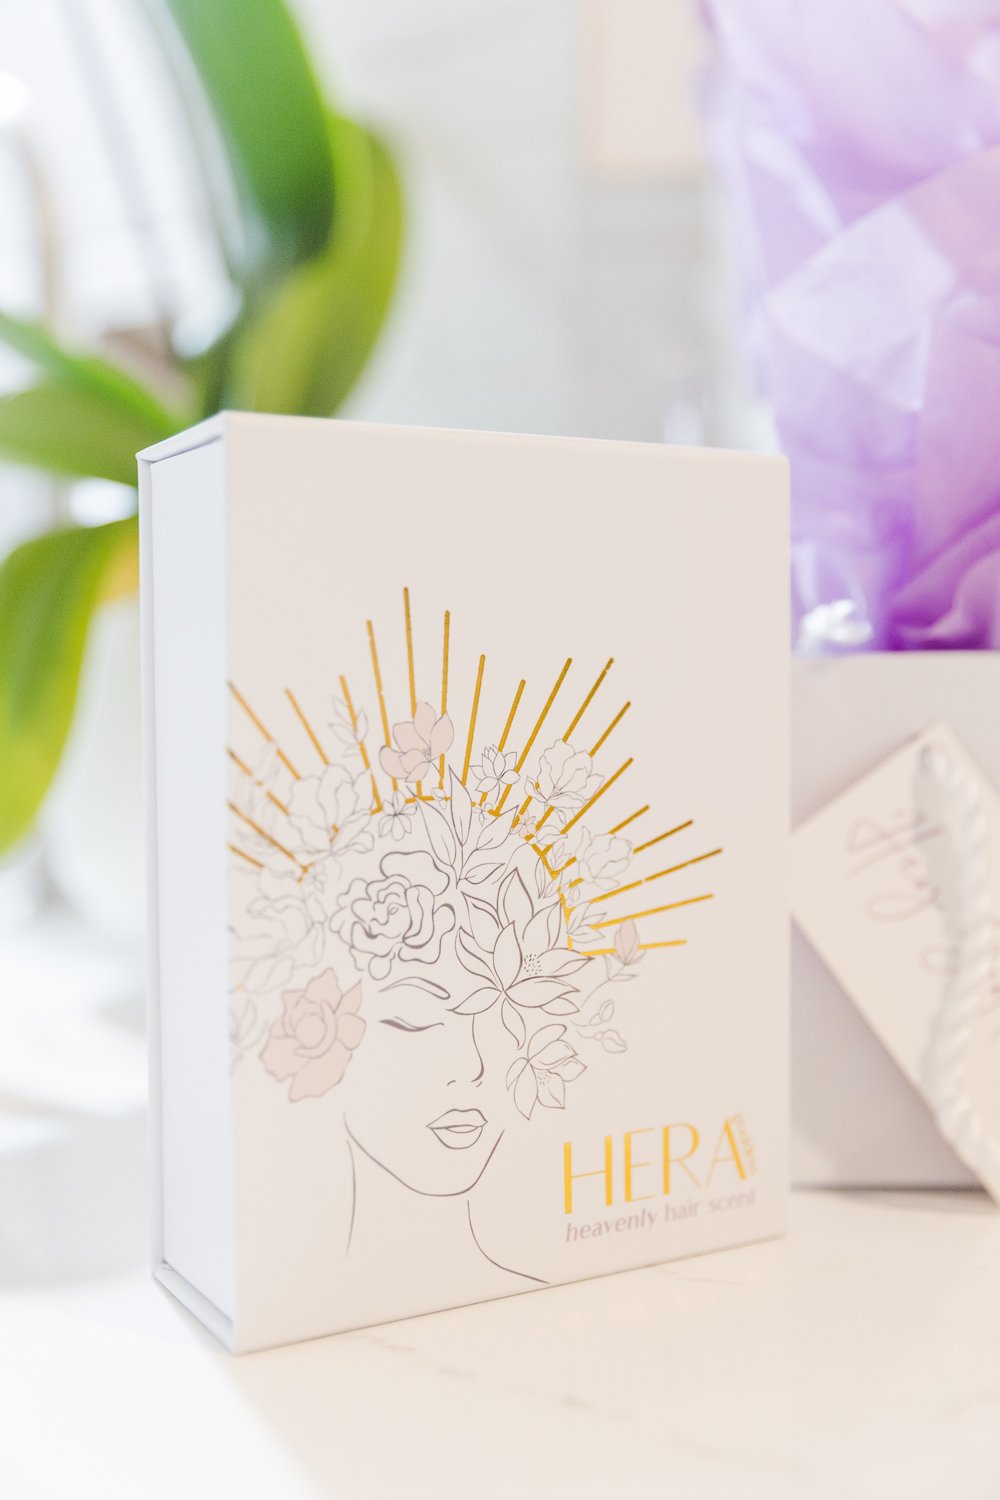 Introducing HERA Hair Fragrance — Jessica Marie Hair Co.